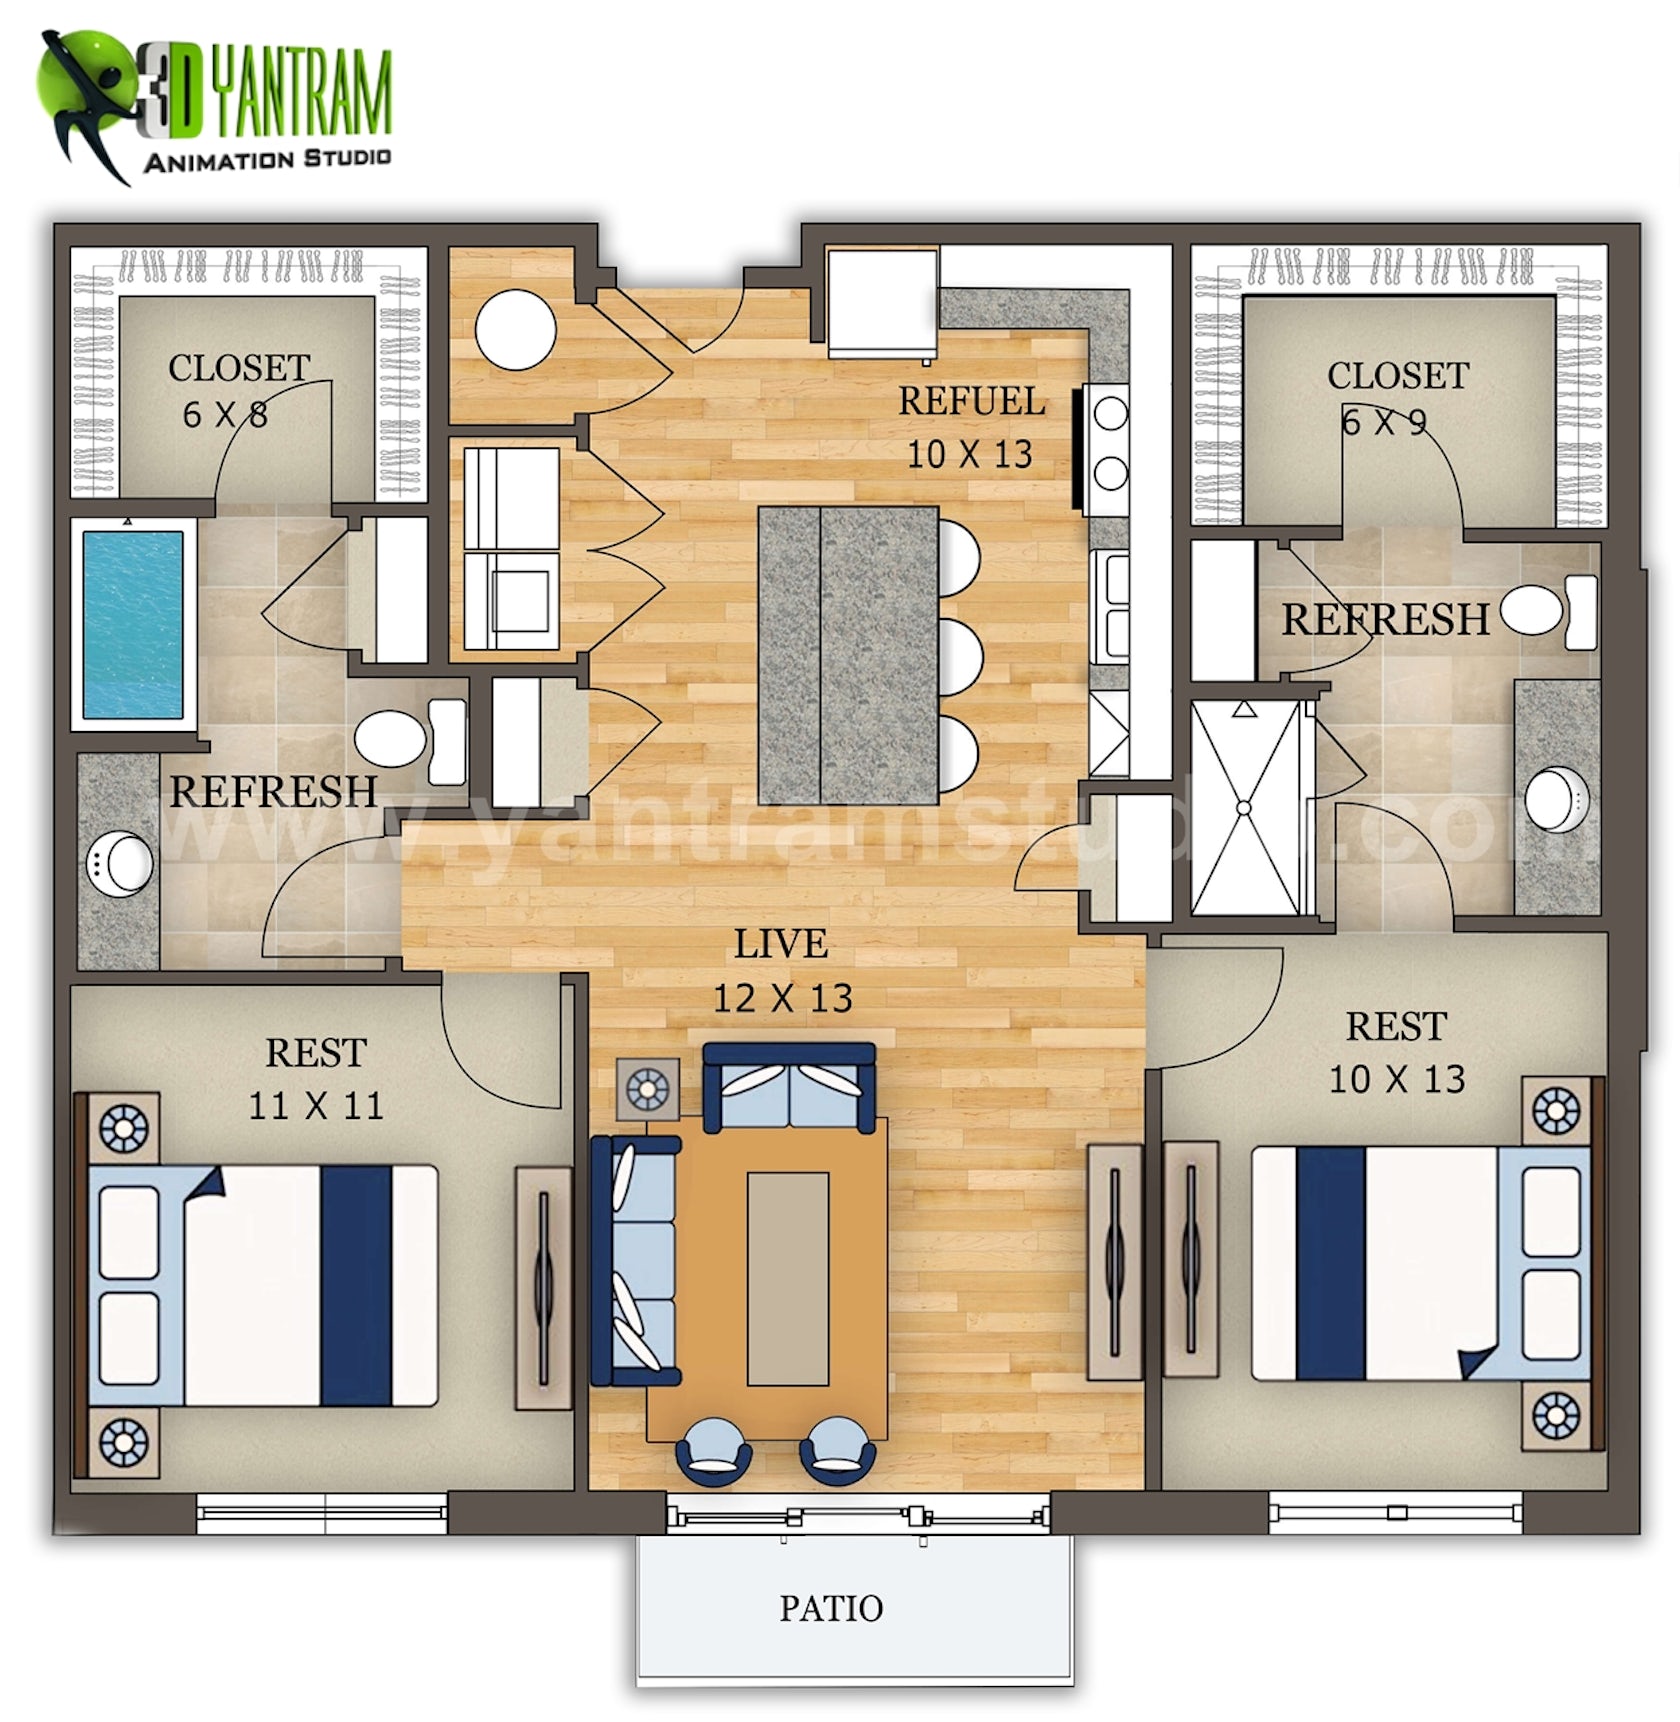 House Floor Plan Design by Yantram Architectural Visualisation Studio ...